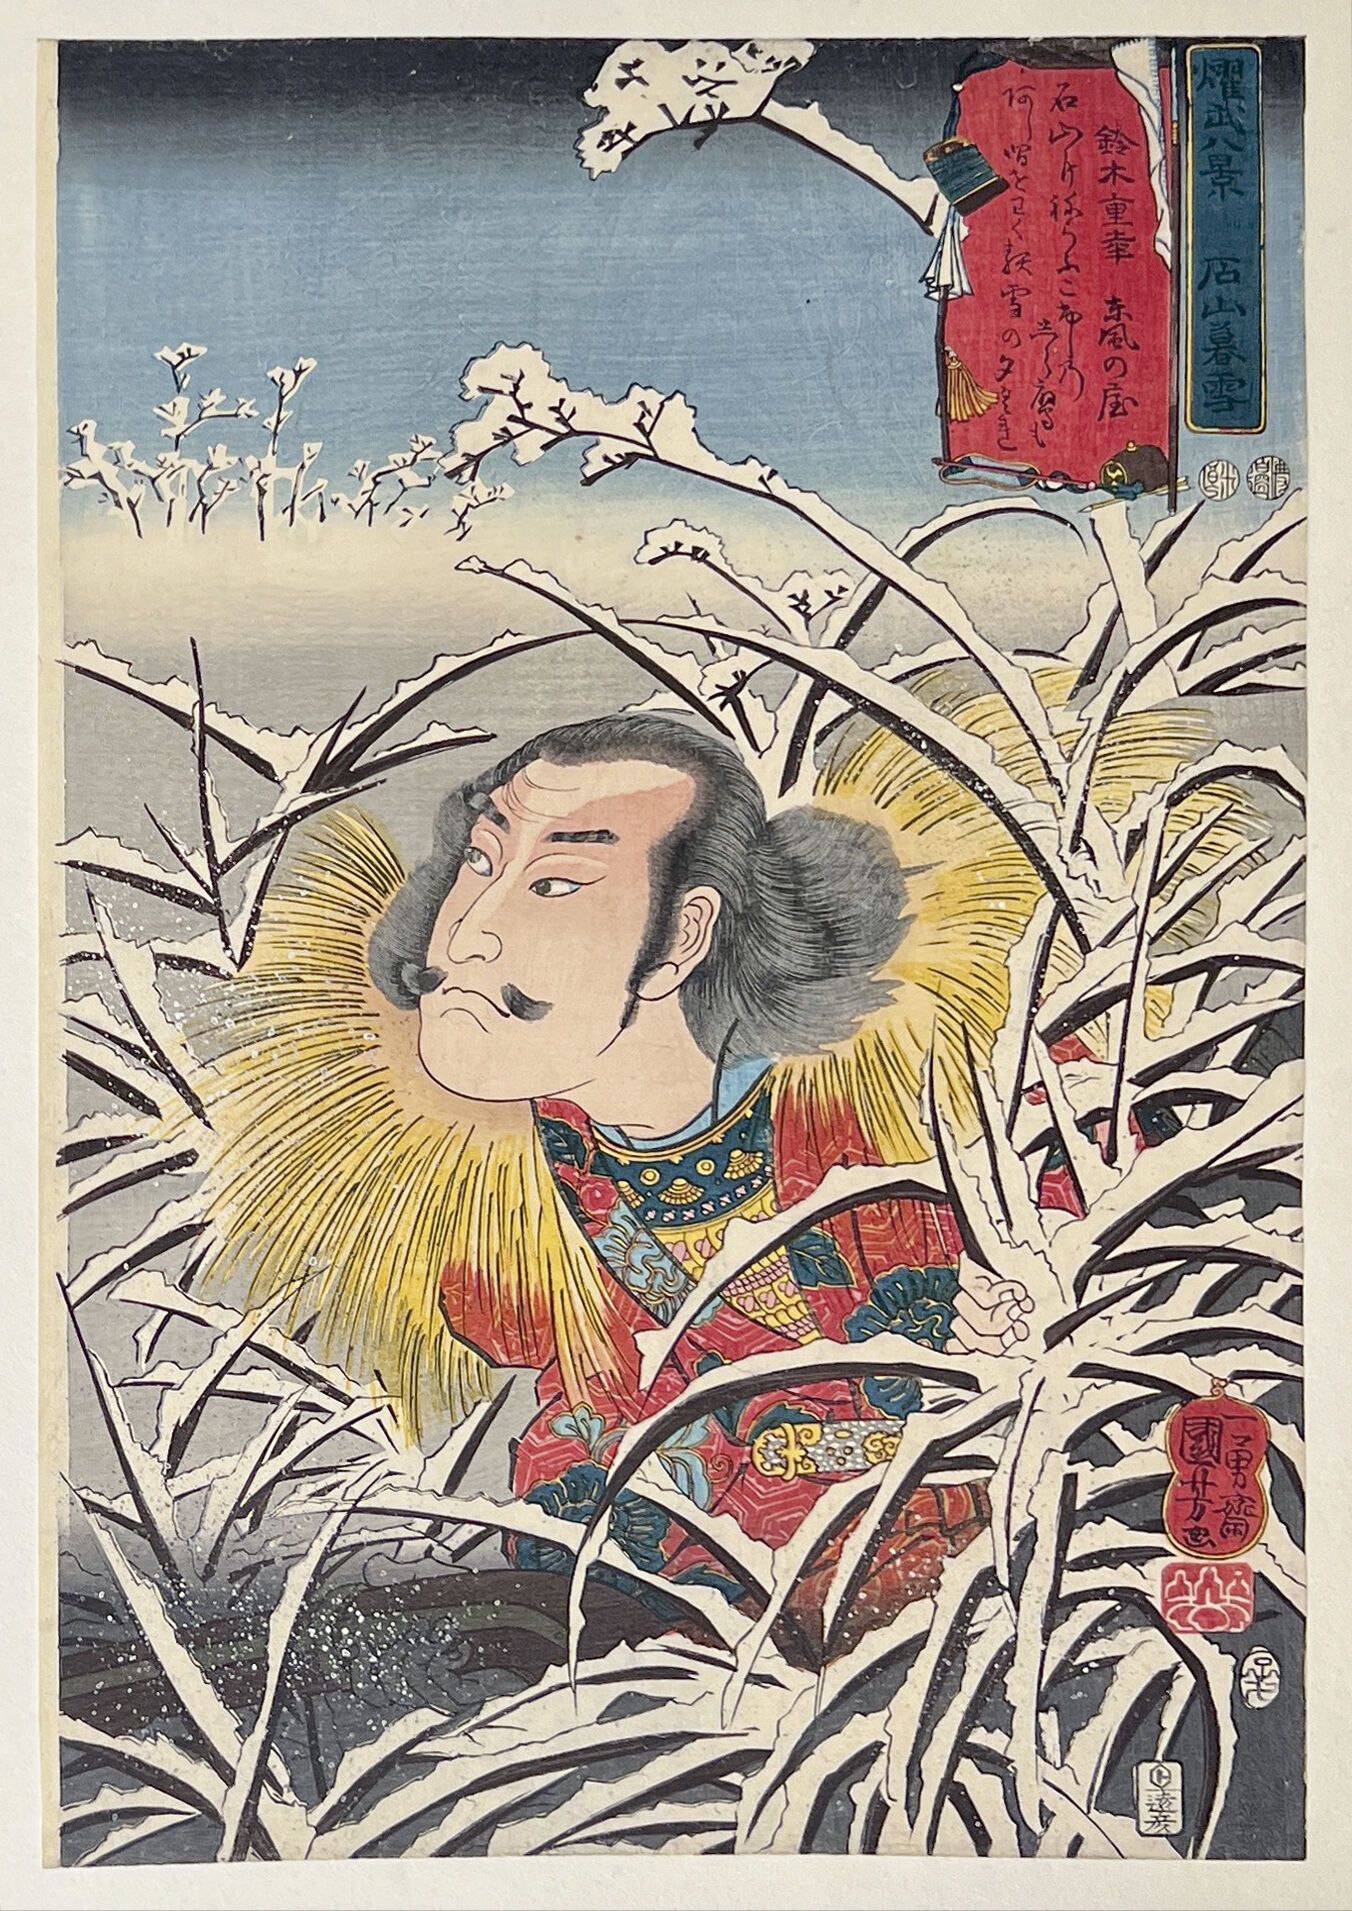 Null 宇都宫邦彦 (1797-1861)
御笔八景》系列中的《御笔八景》，版式为《石山博雪》，石山的黄昏之雪。 
签名：Ichiyusai Kuniyosh&hellip;